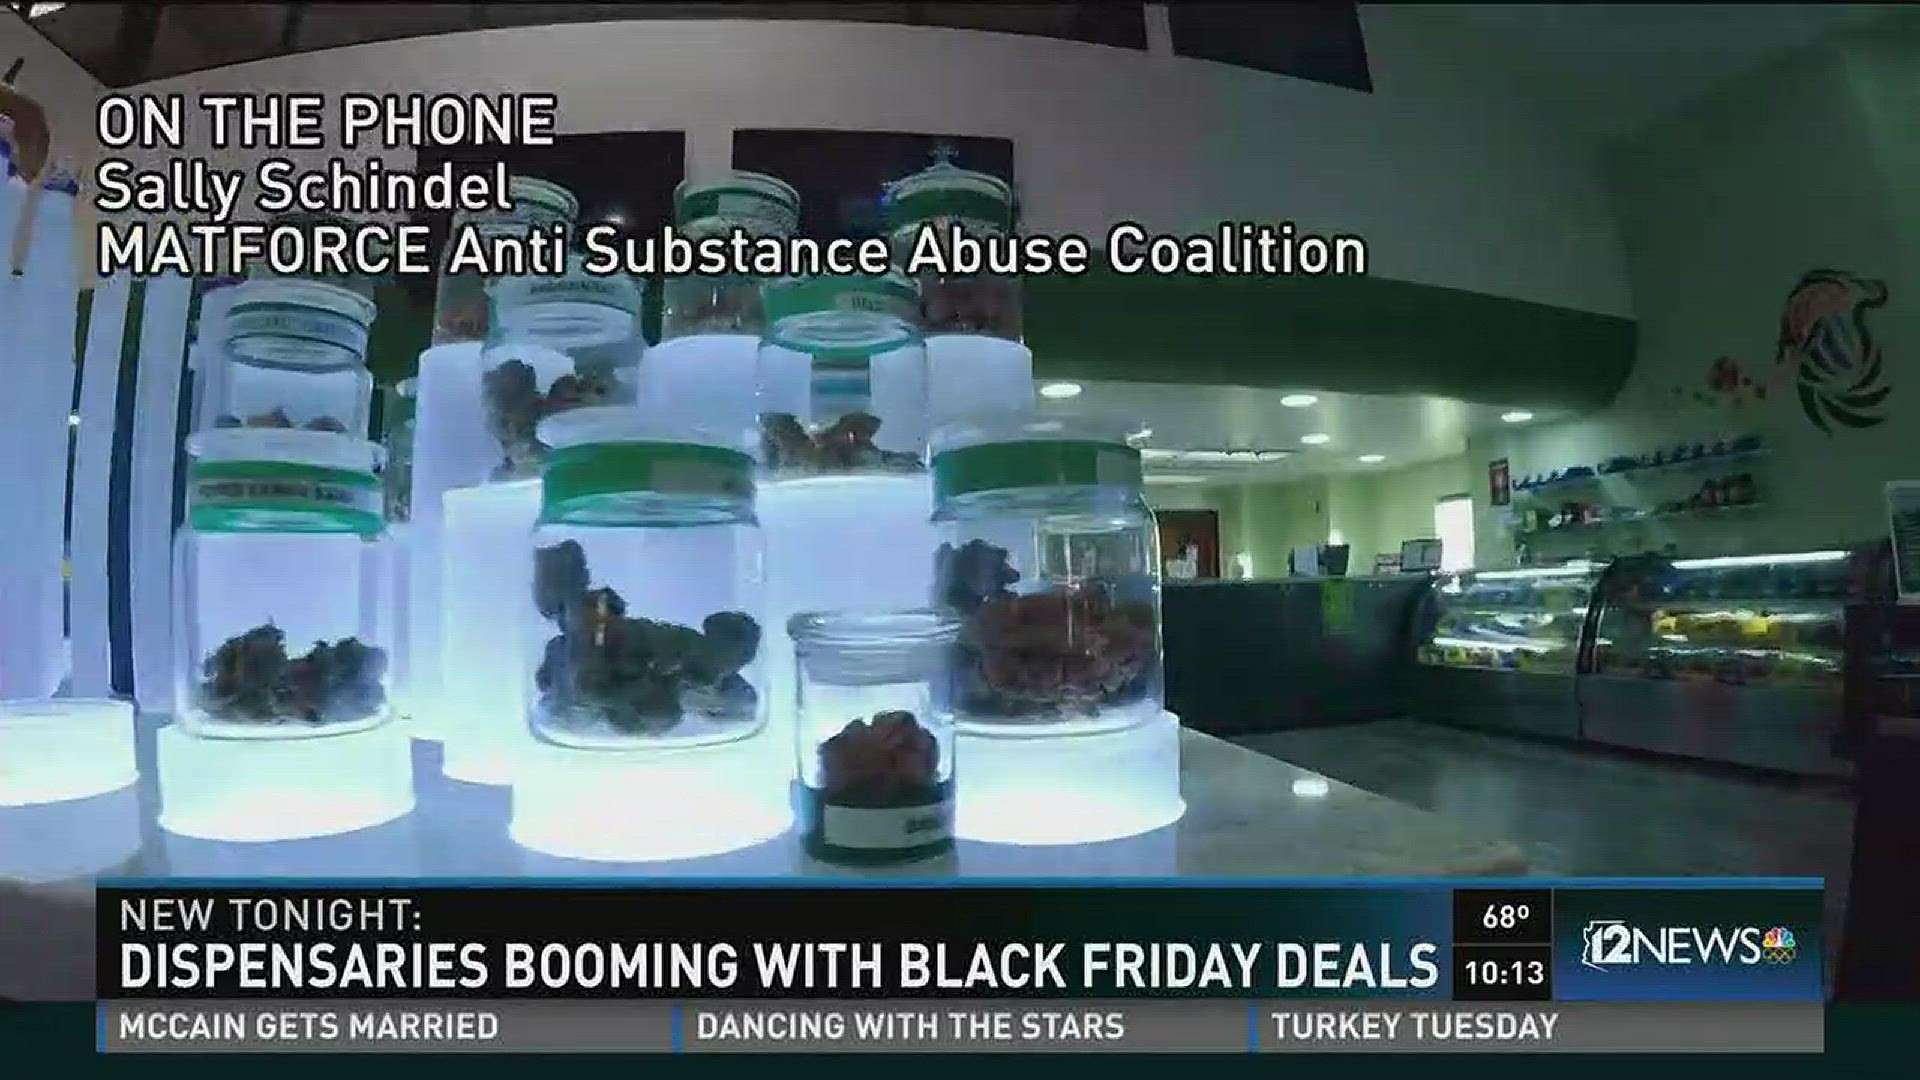 Medical marijuana dispensaries are dishing out Black Friday deals in Arizona.